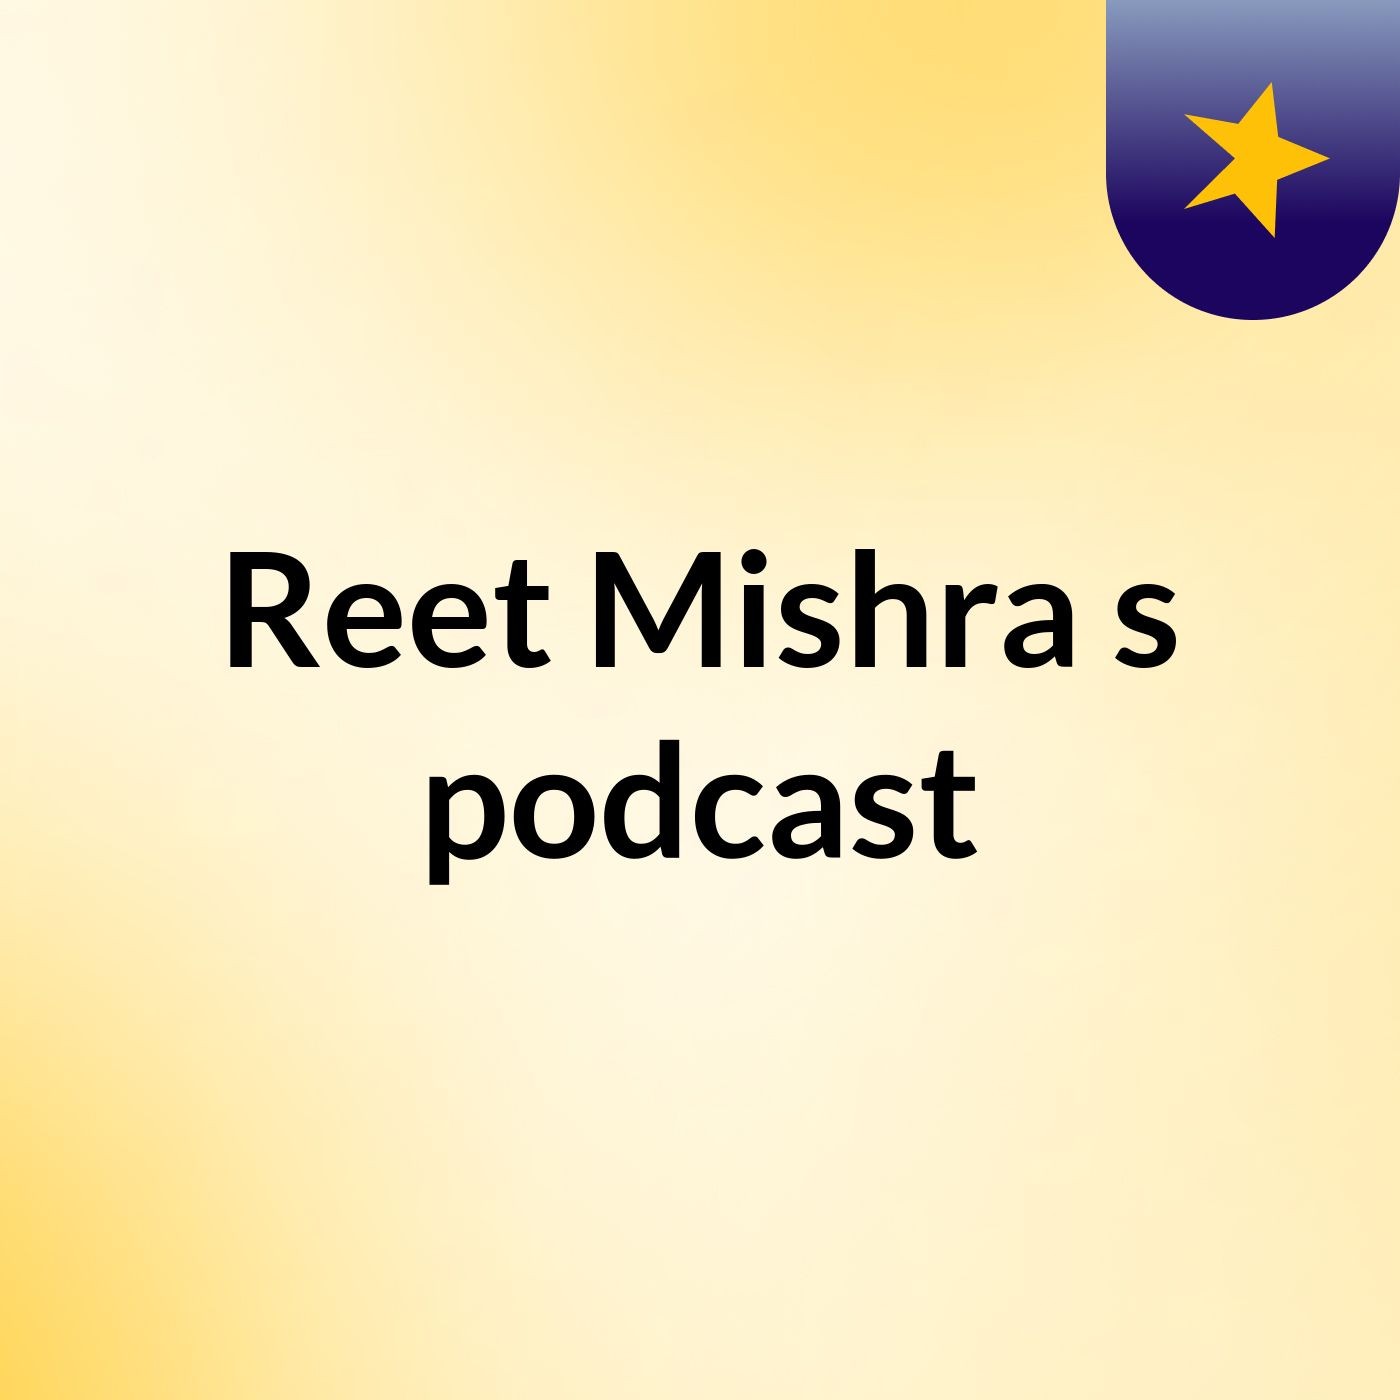 Reet Mishra's podcast